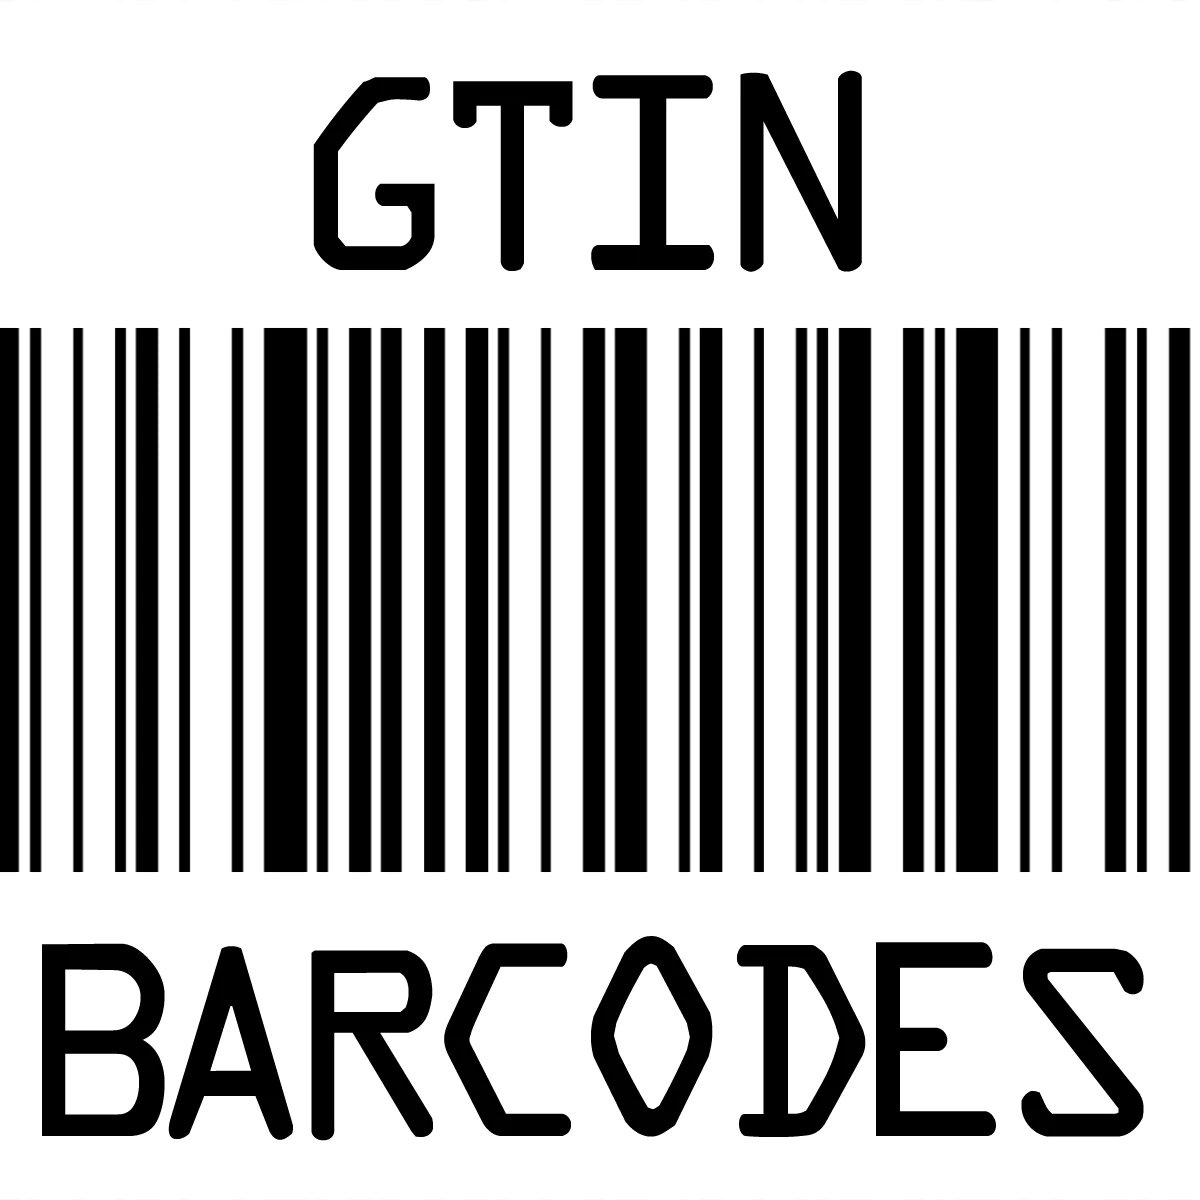 Buy GTINs for Google Shopping